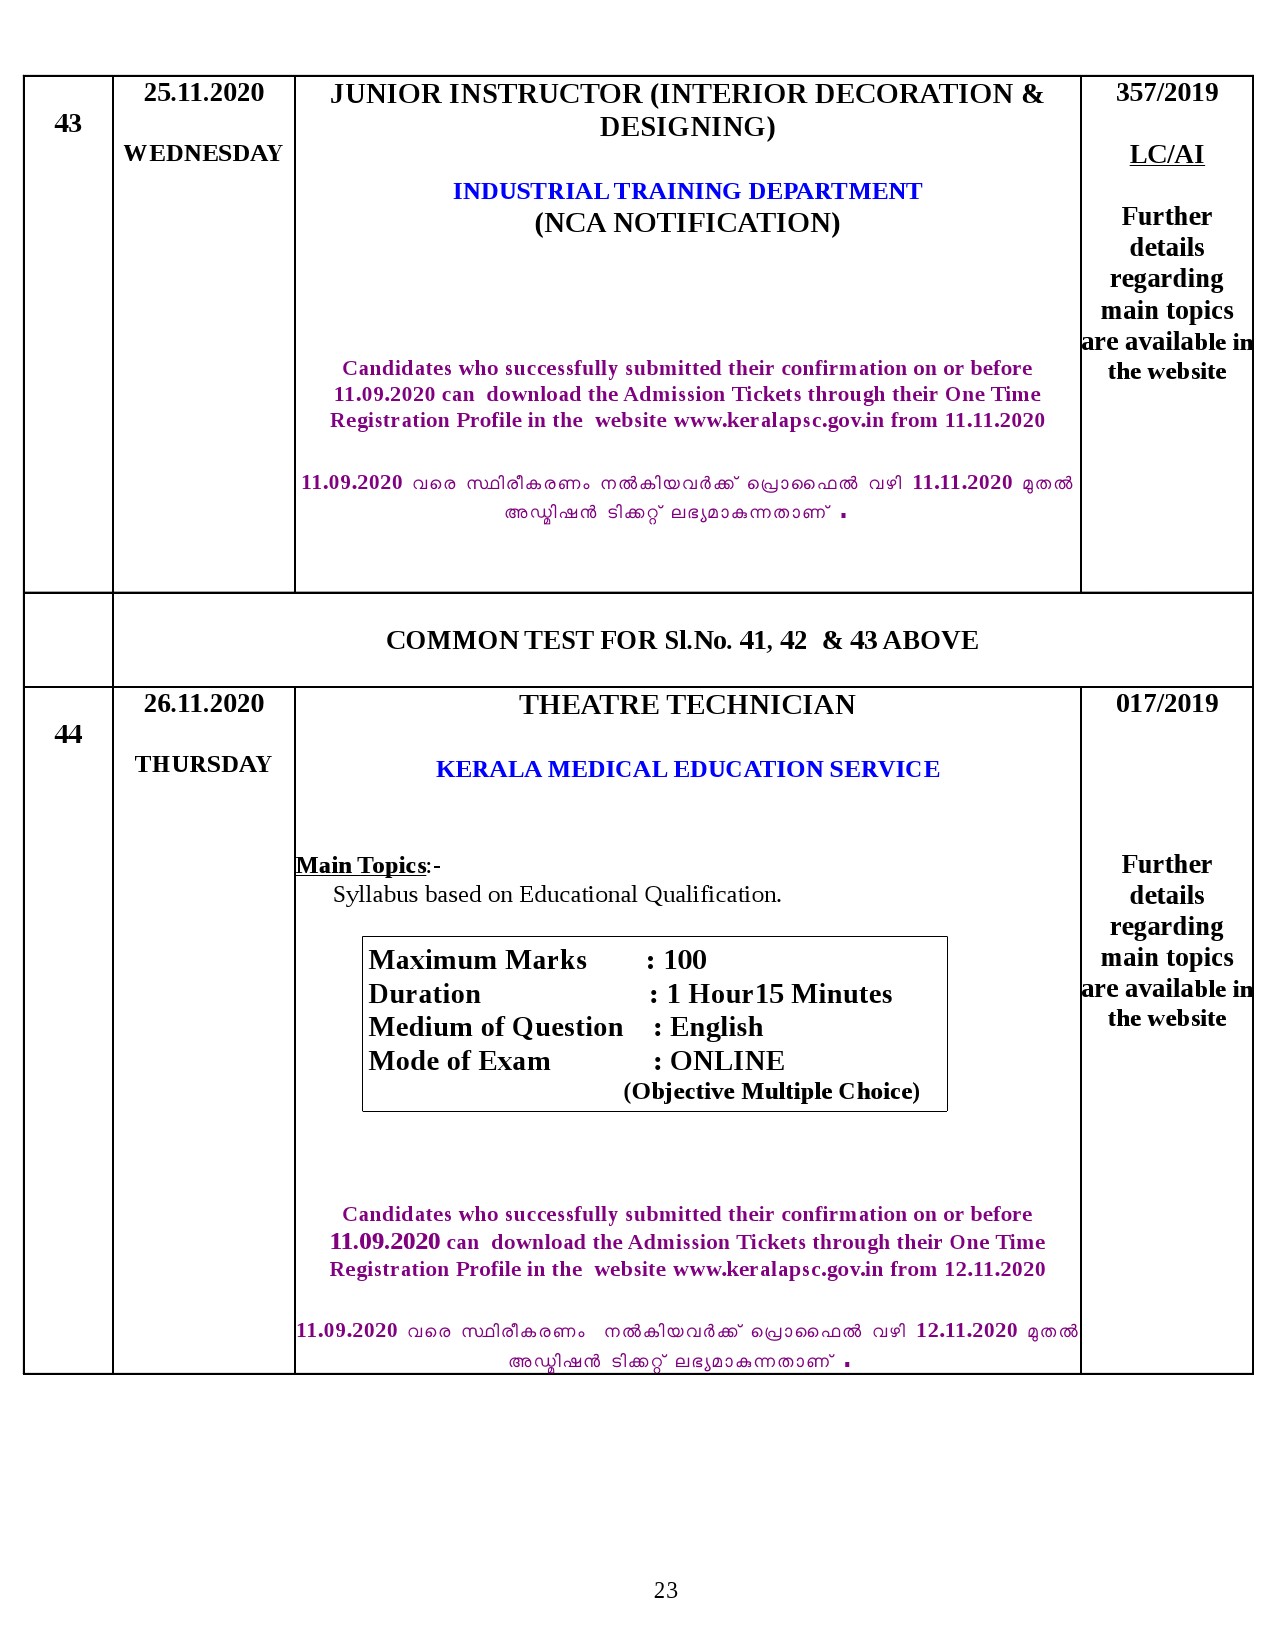 Kerala PSC Final Exam Schedule for November 2020 - Notification Image 23